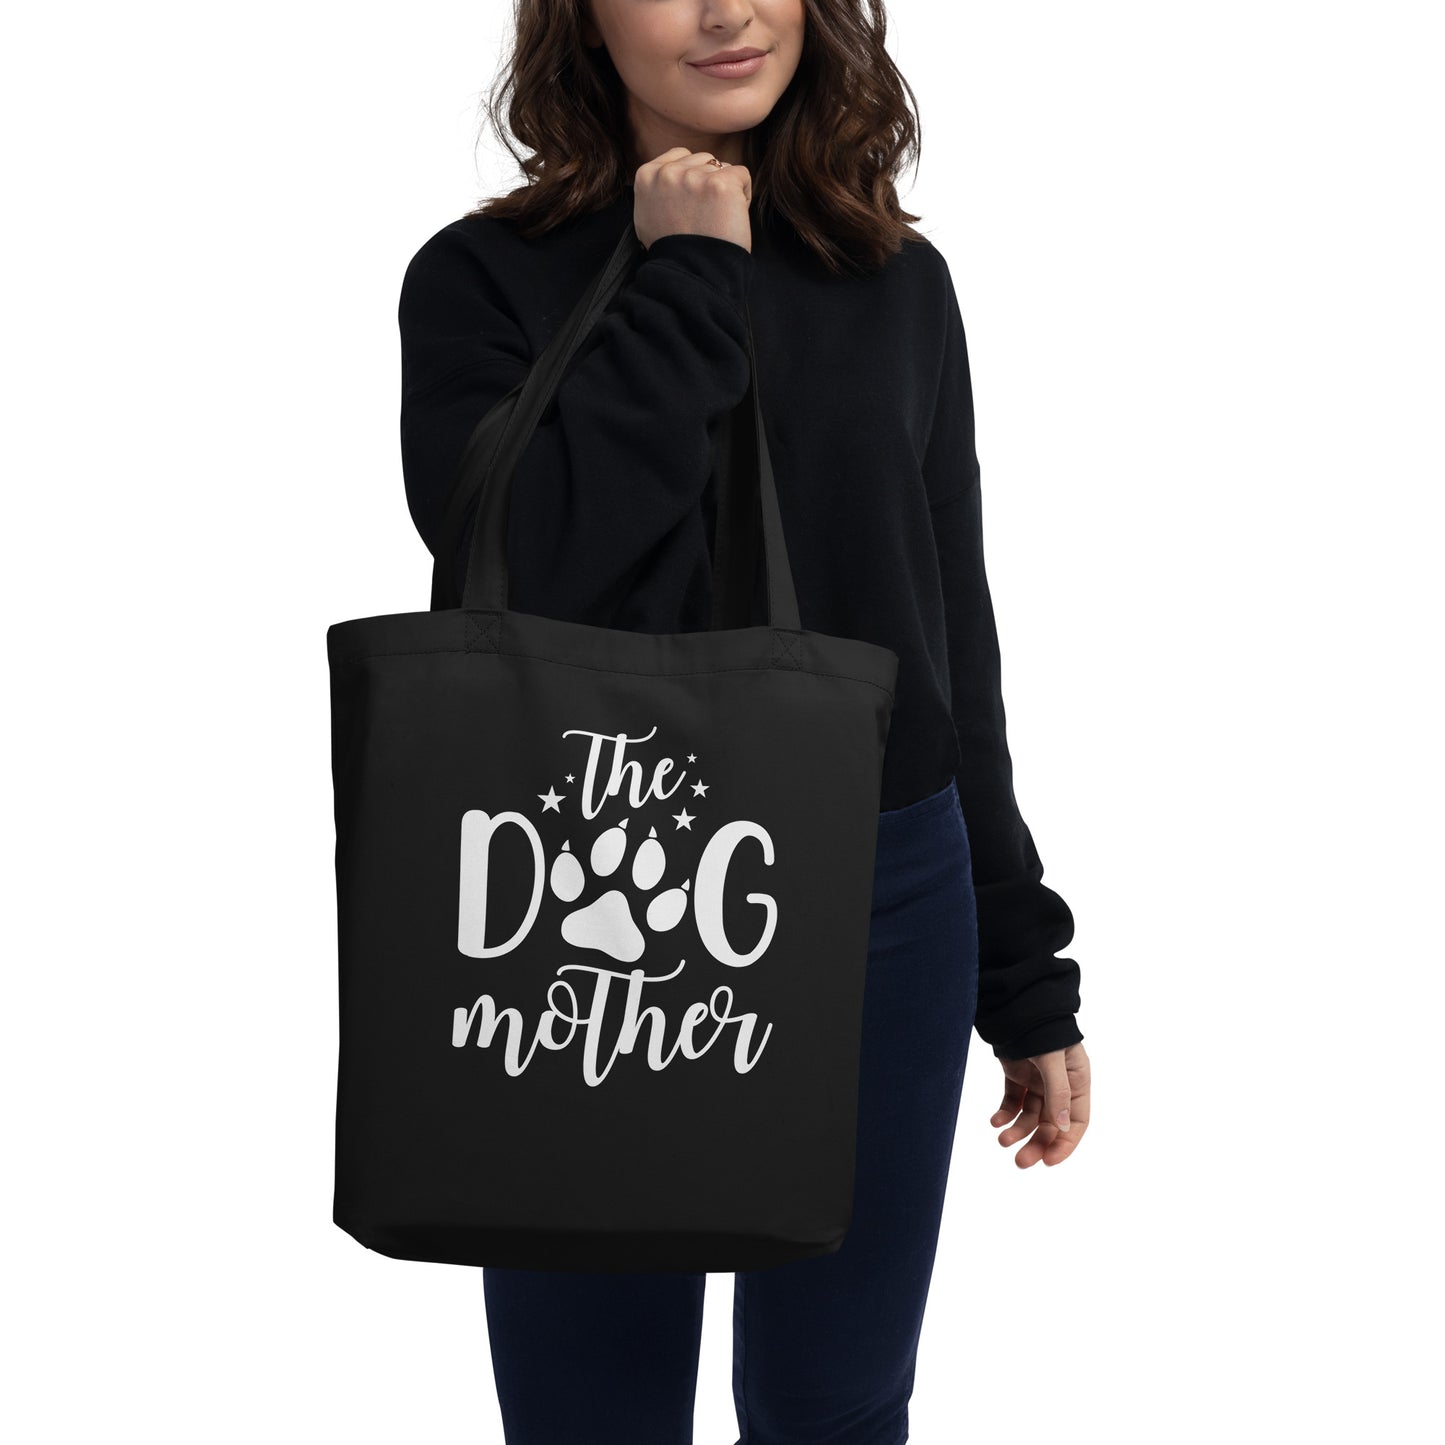 The Dog Mother Eco Tote Bag